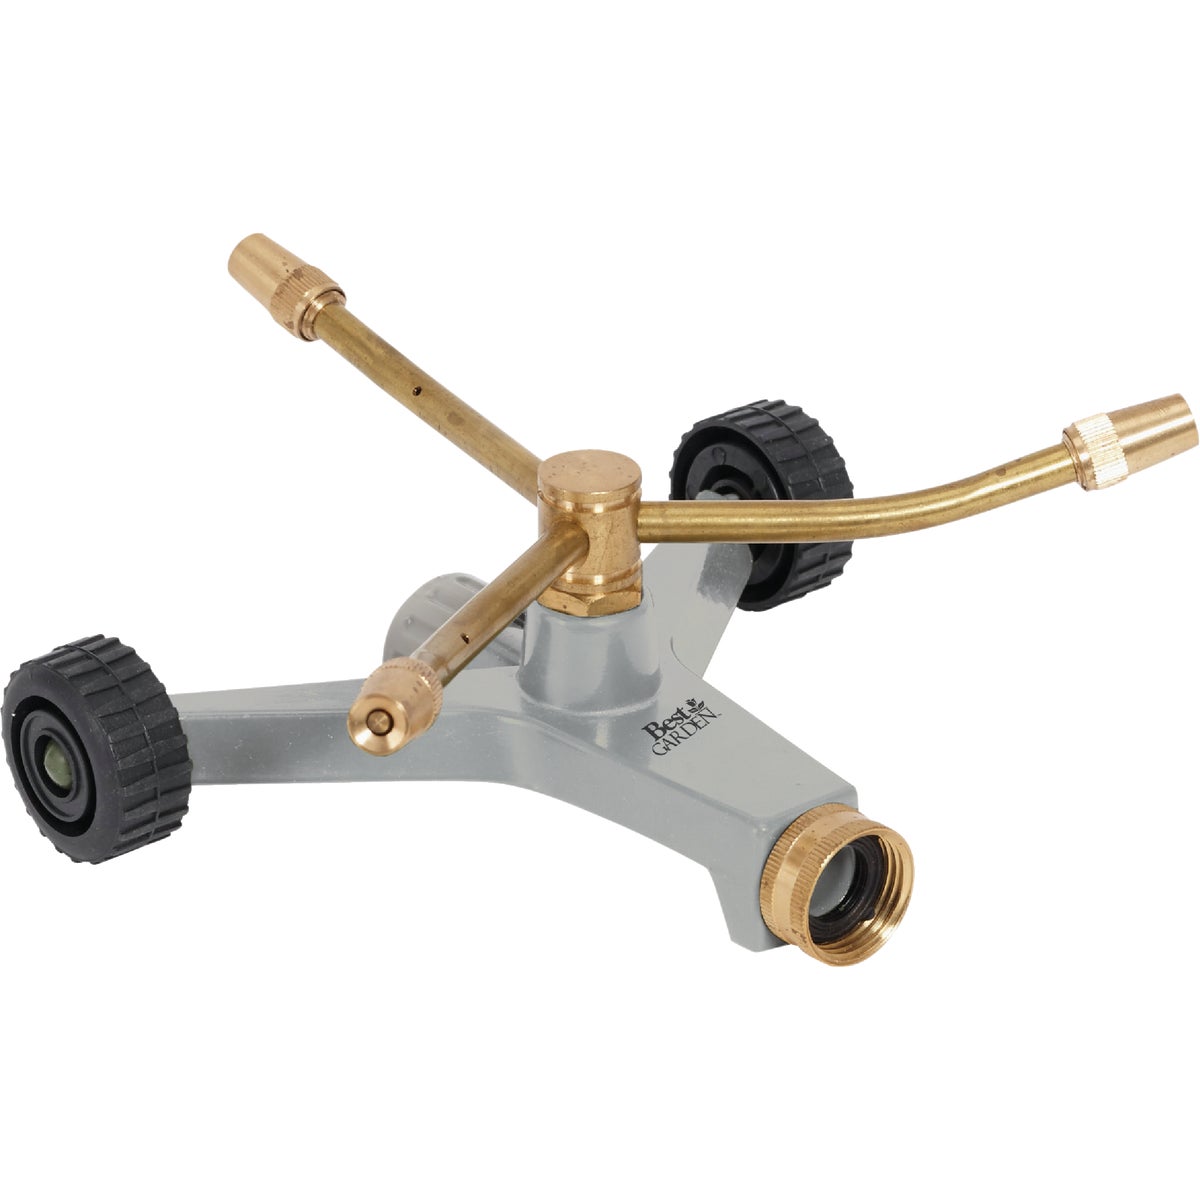 Item 732062, Brass 3-arm rotary sprinkler on a small wheel base.